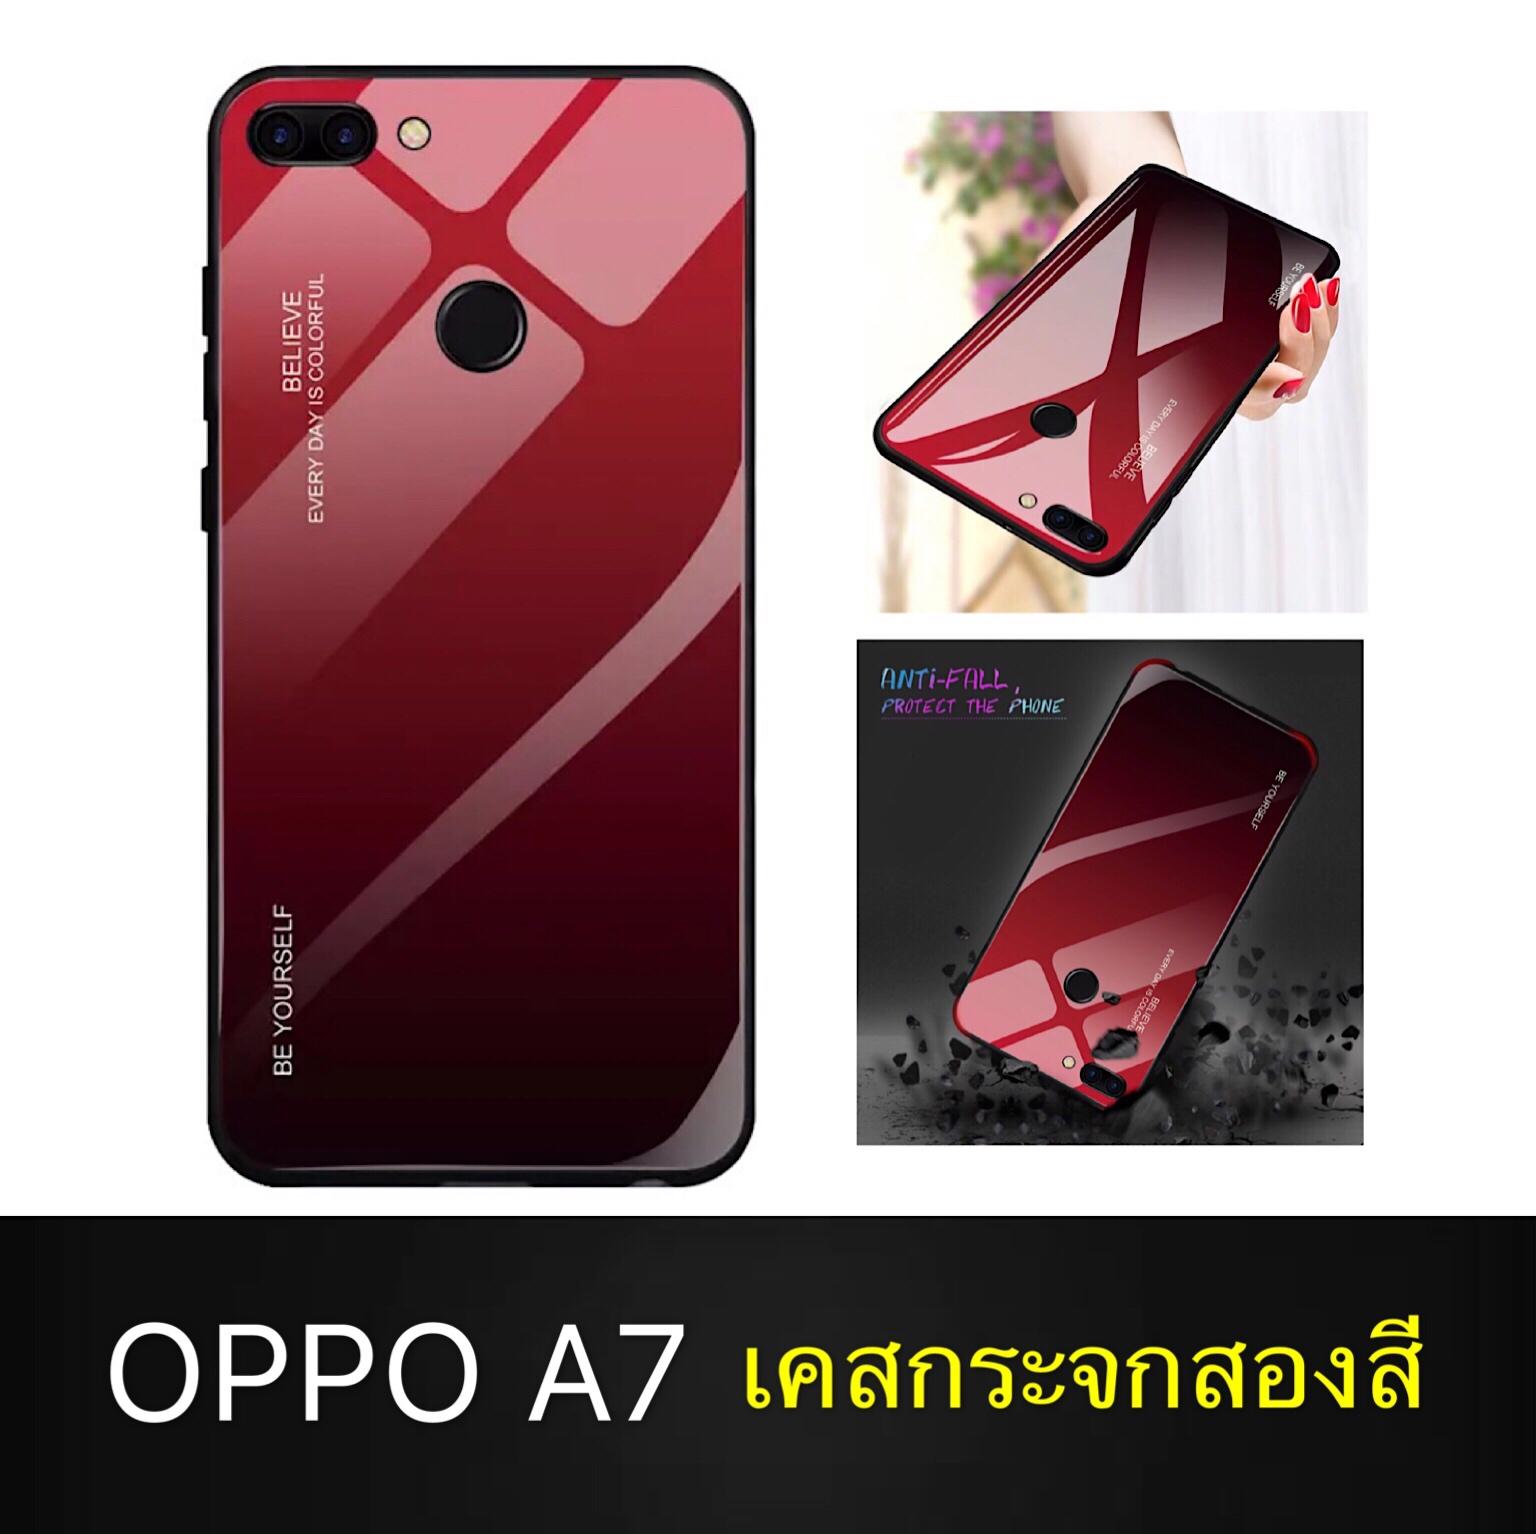 Fashion Case OPPO A7 เคสออฟโป้  สำหรับ Oppo A7 เพลิดเพลินไปกับ 9 PLUS Gradient สีกระจกเทมเปอร์ปลอกแก้วฝาหลังกันชน TPU CASE สินค้าใหม่ OPPO A7 Case